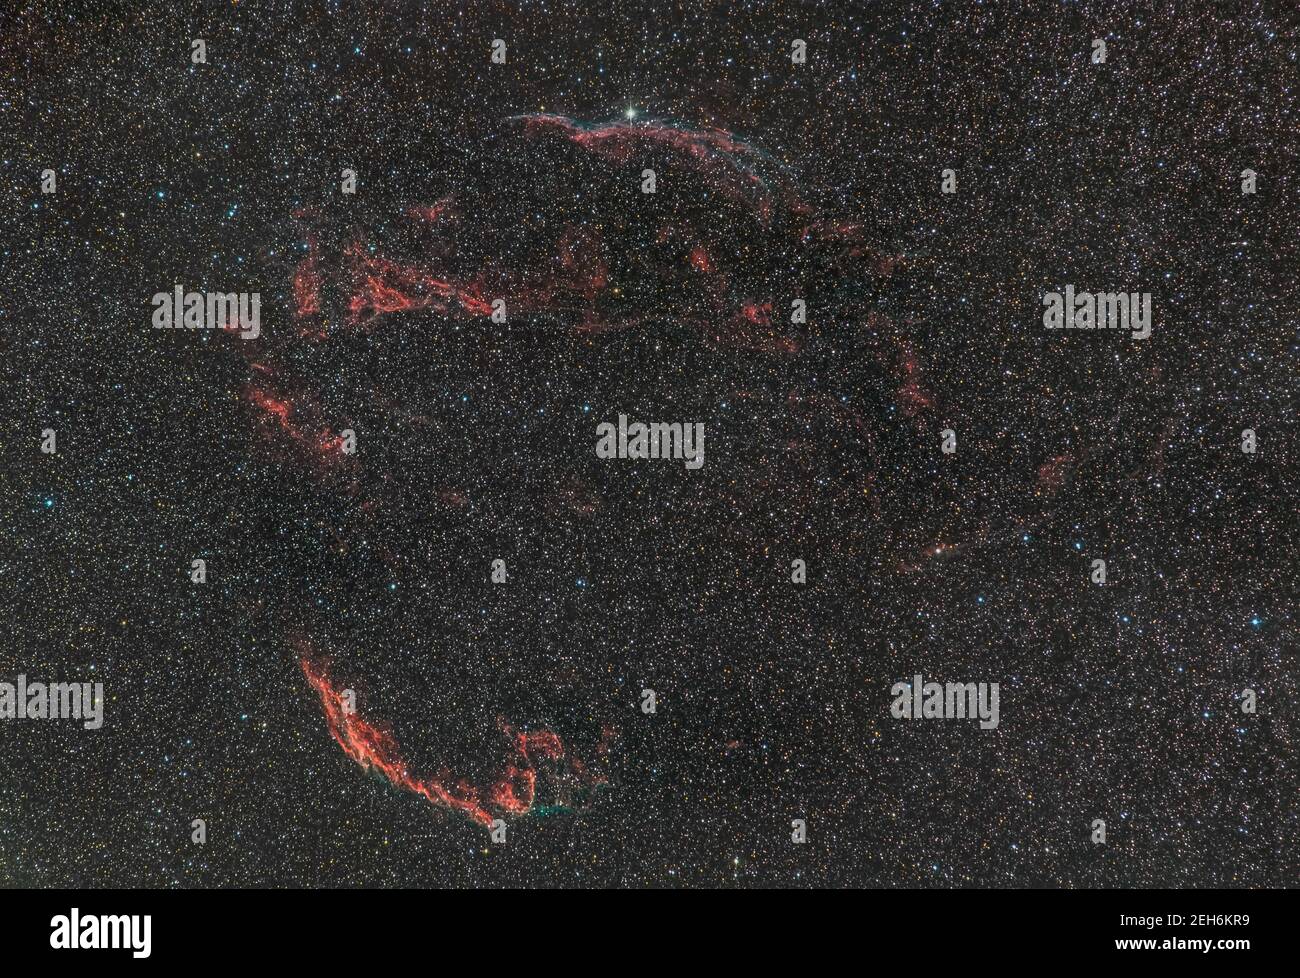 veil nebula in swan constellation Stock Photo